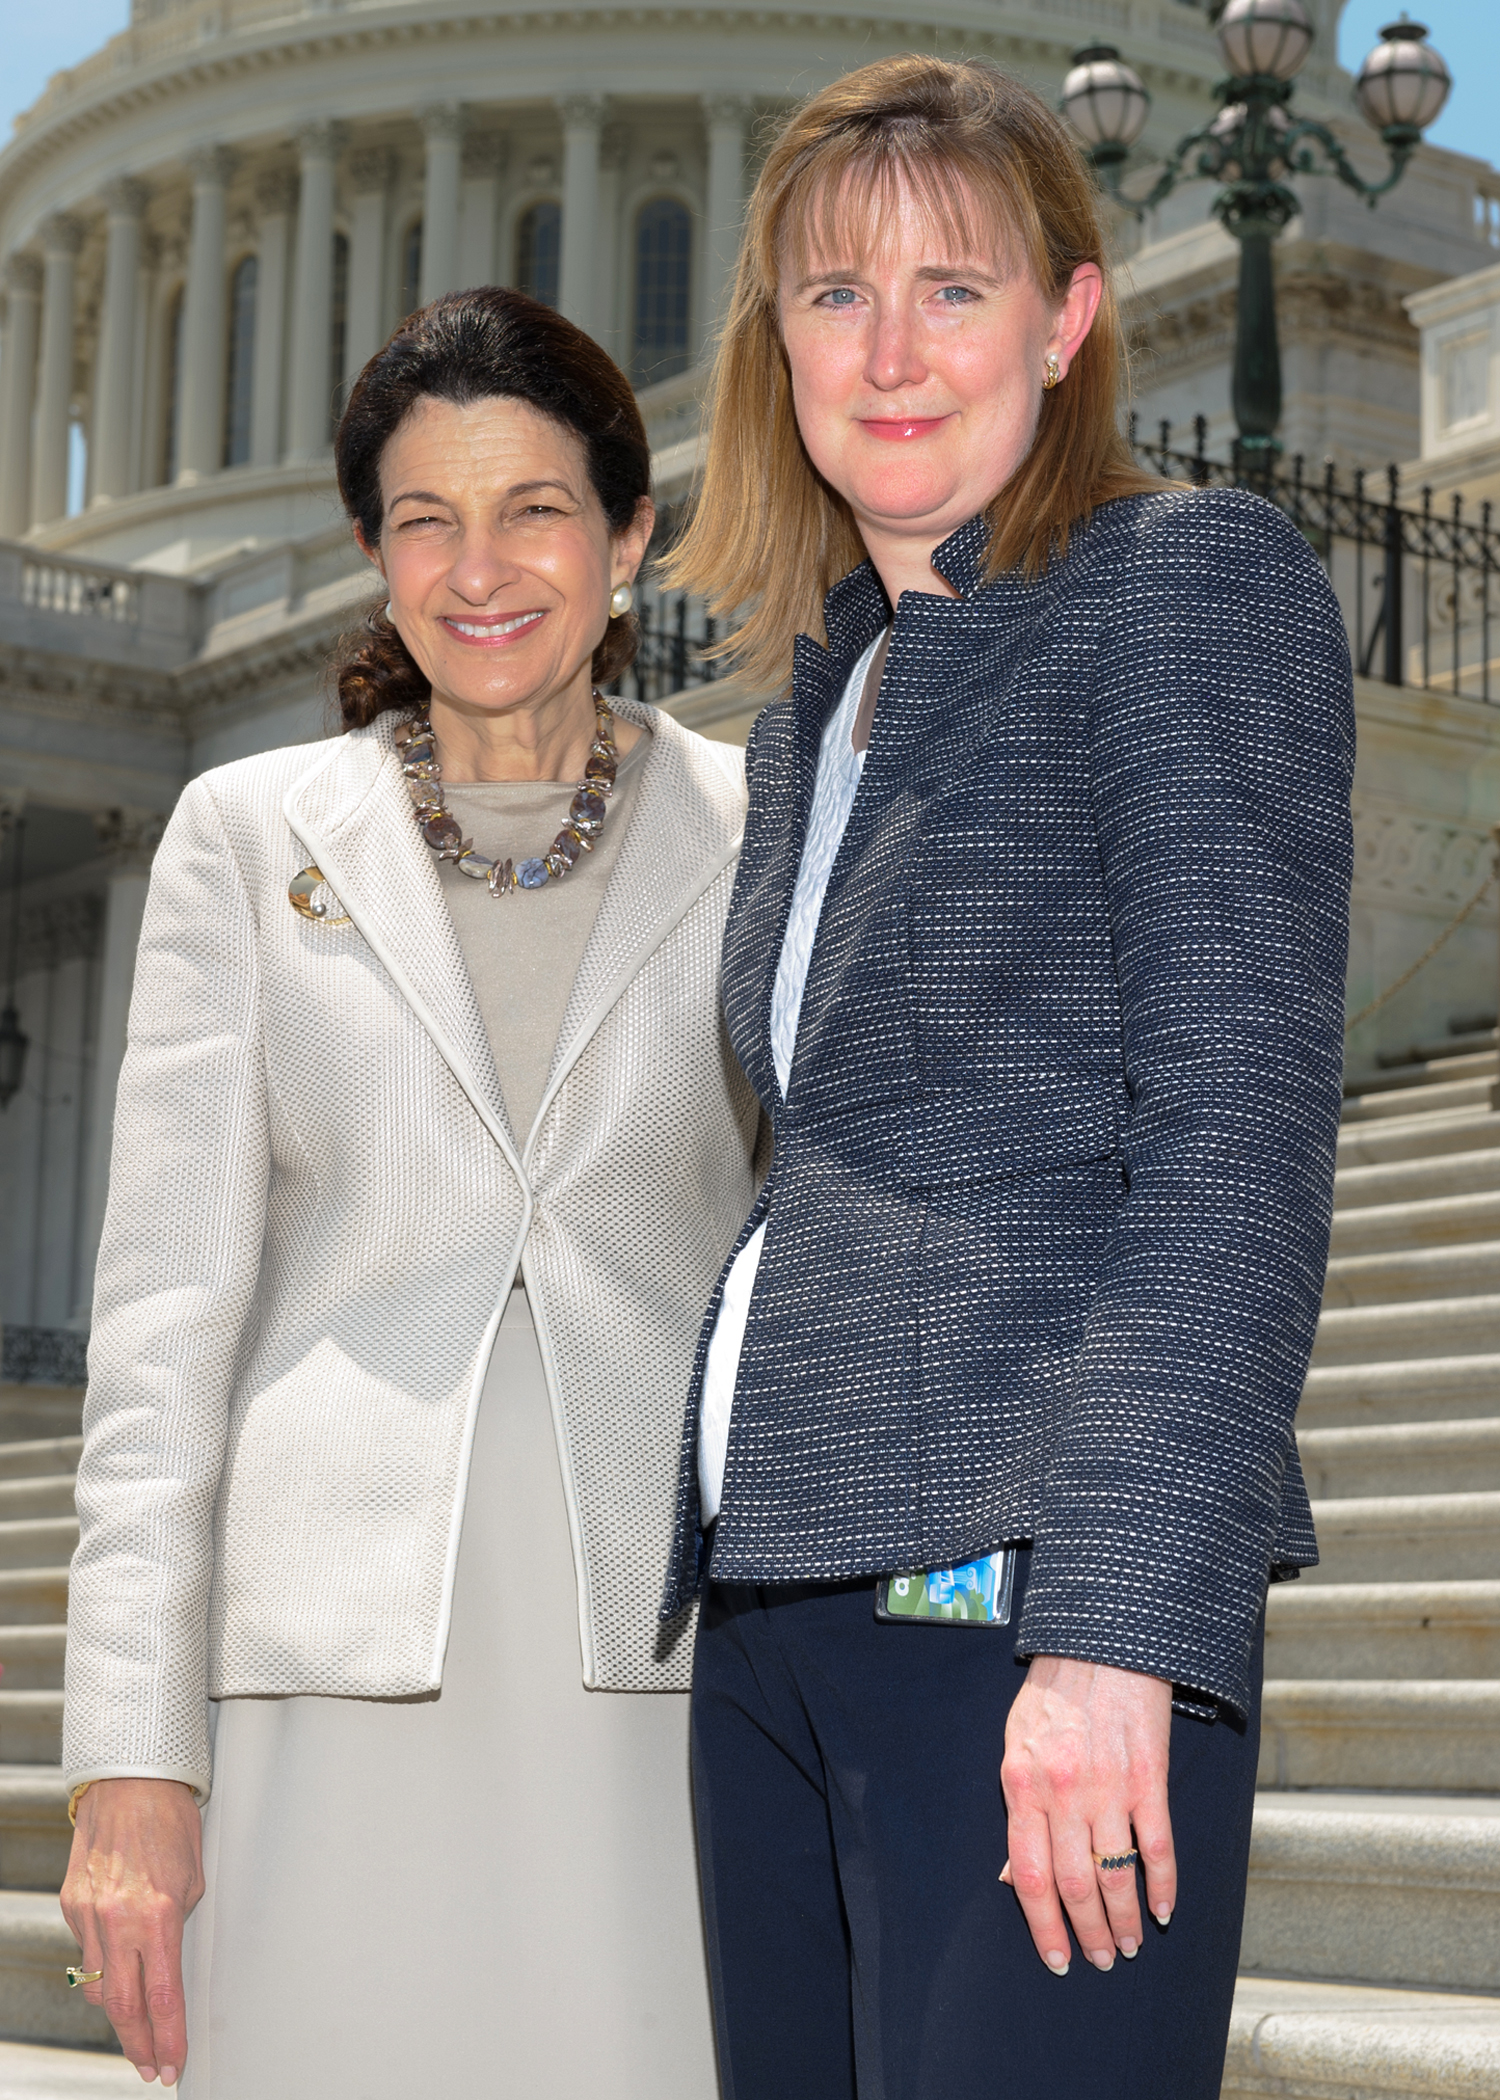 Dr. Kathy Simmons with U.S. Senator Olympia Snowe